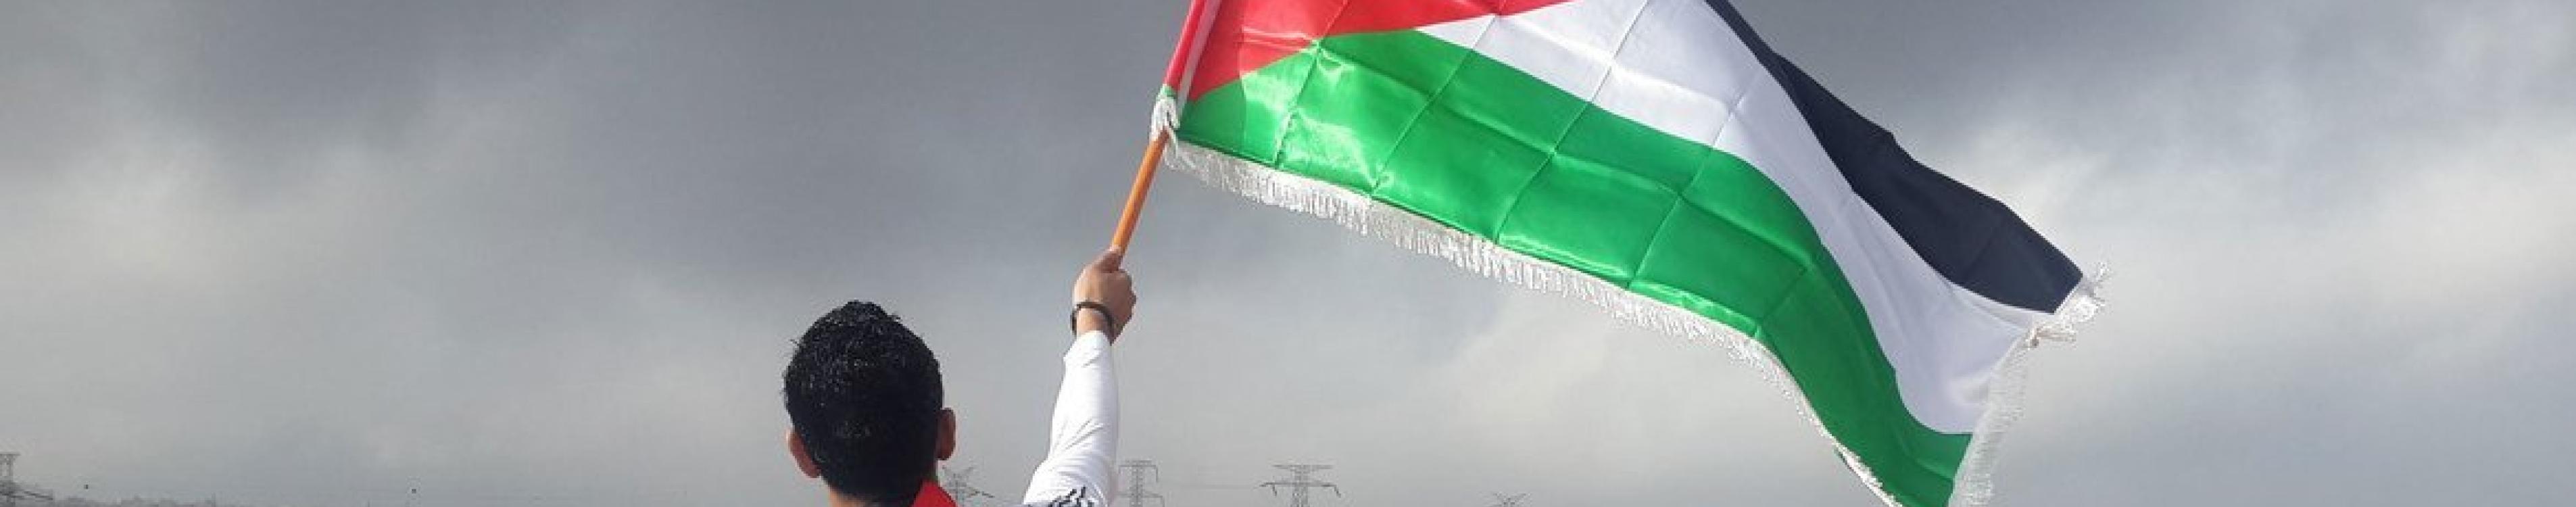 Unsplash/Ahmed Abu Hameeda Young man waves flag of Palestine